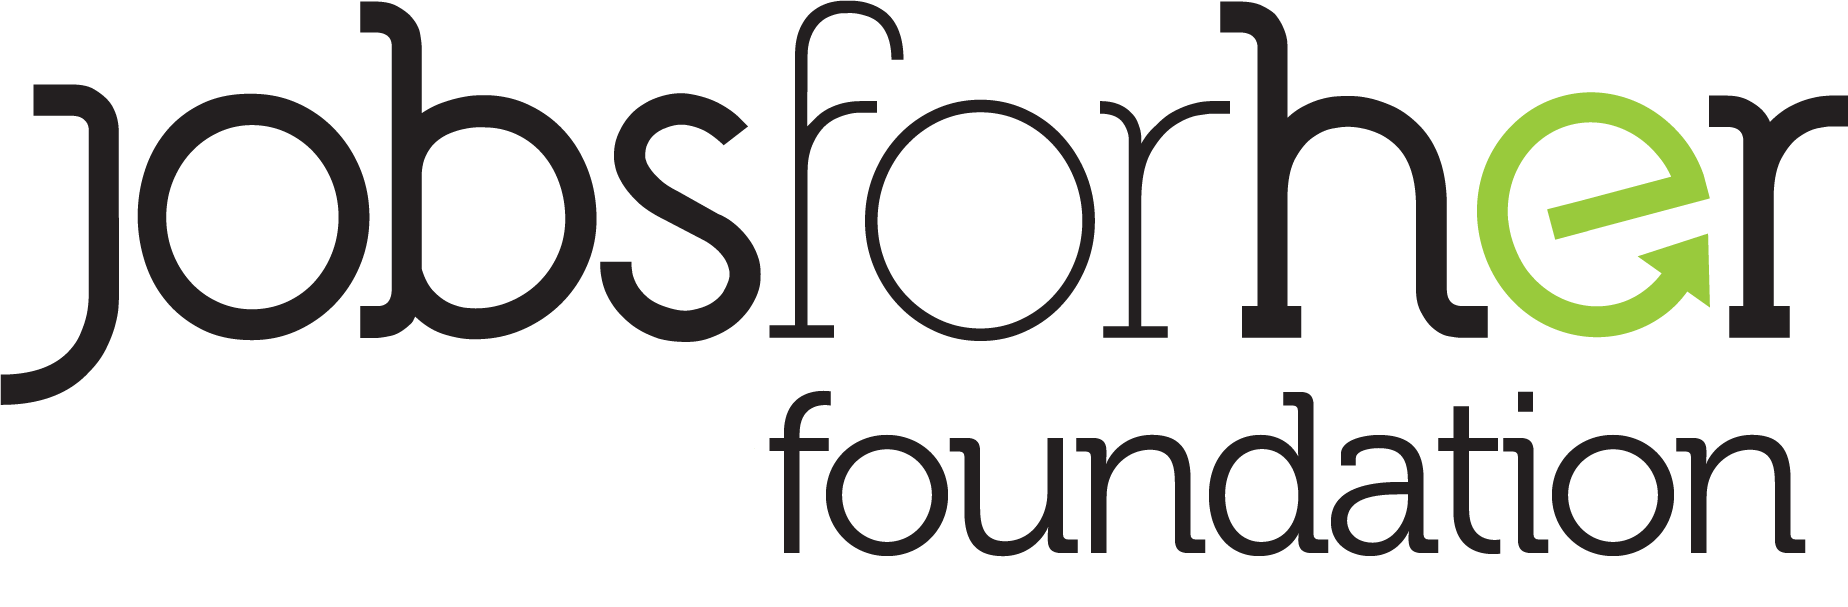 JobsForHer Foundation  